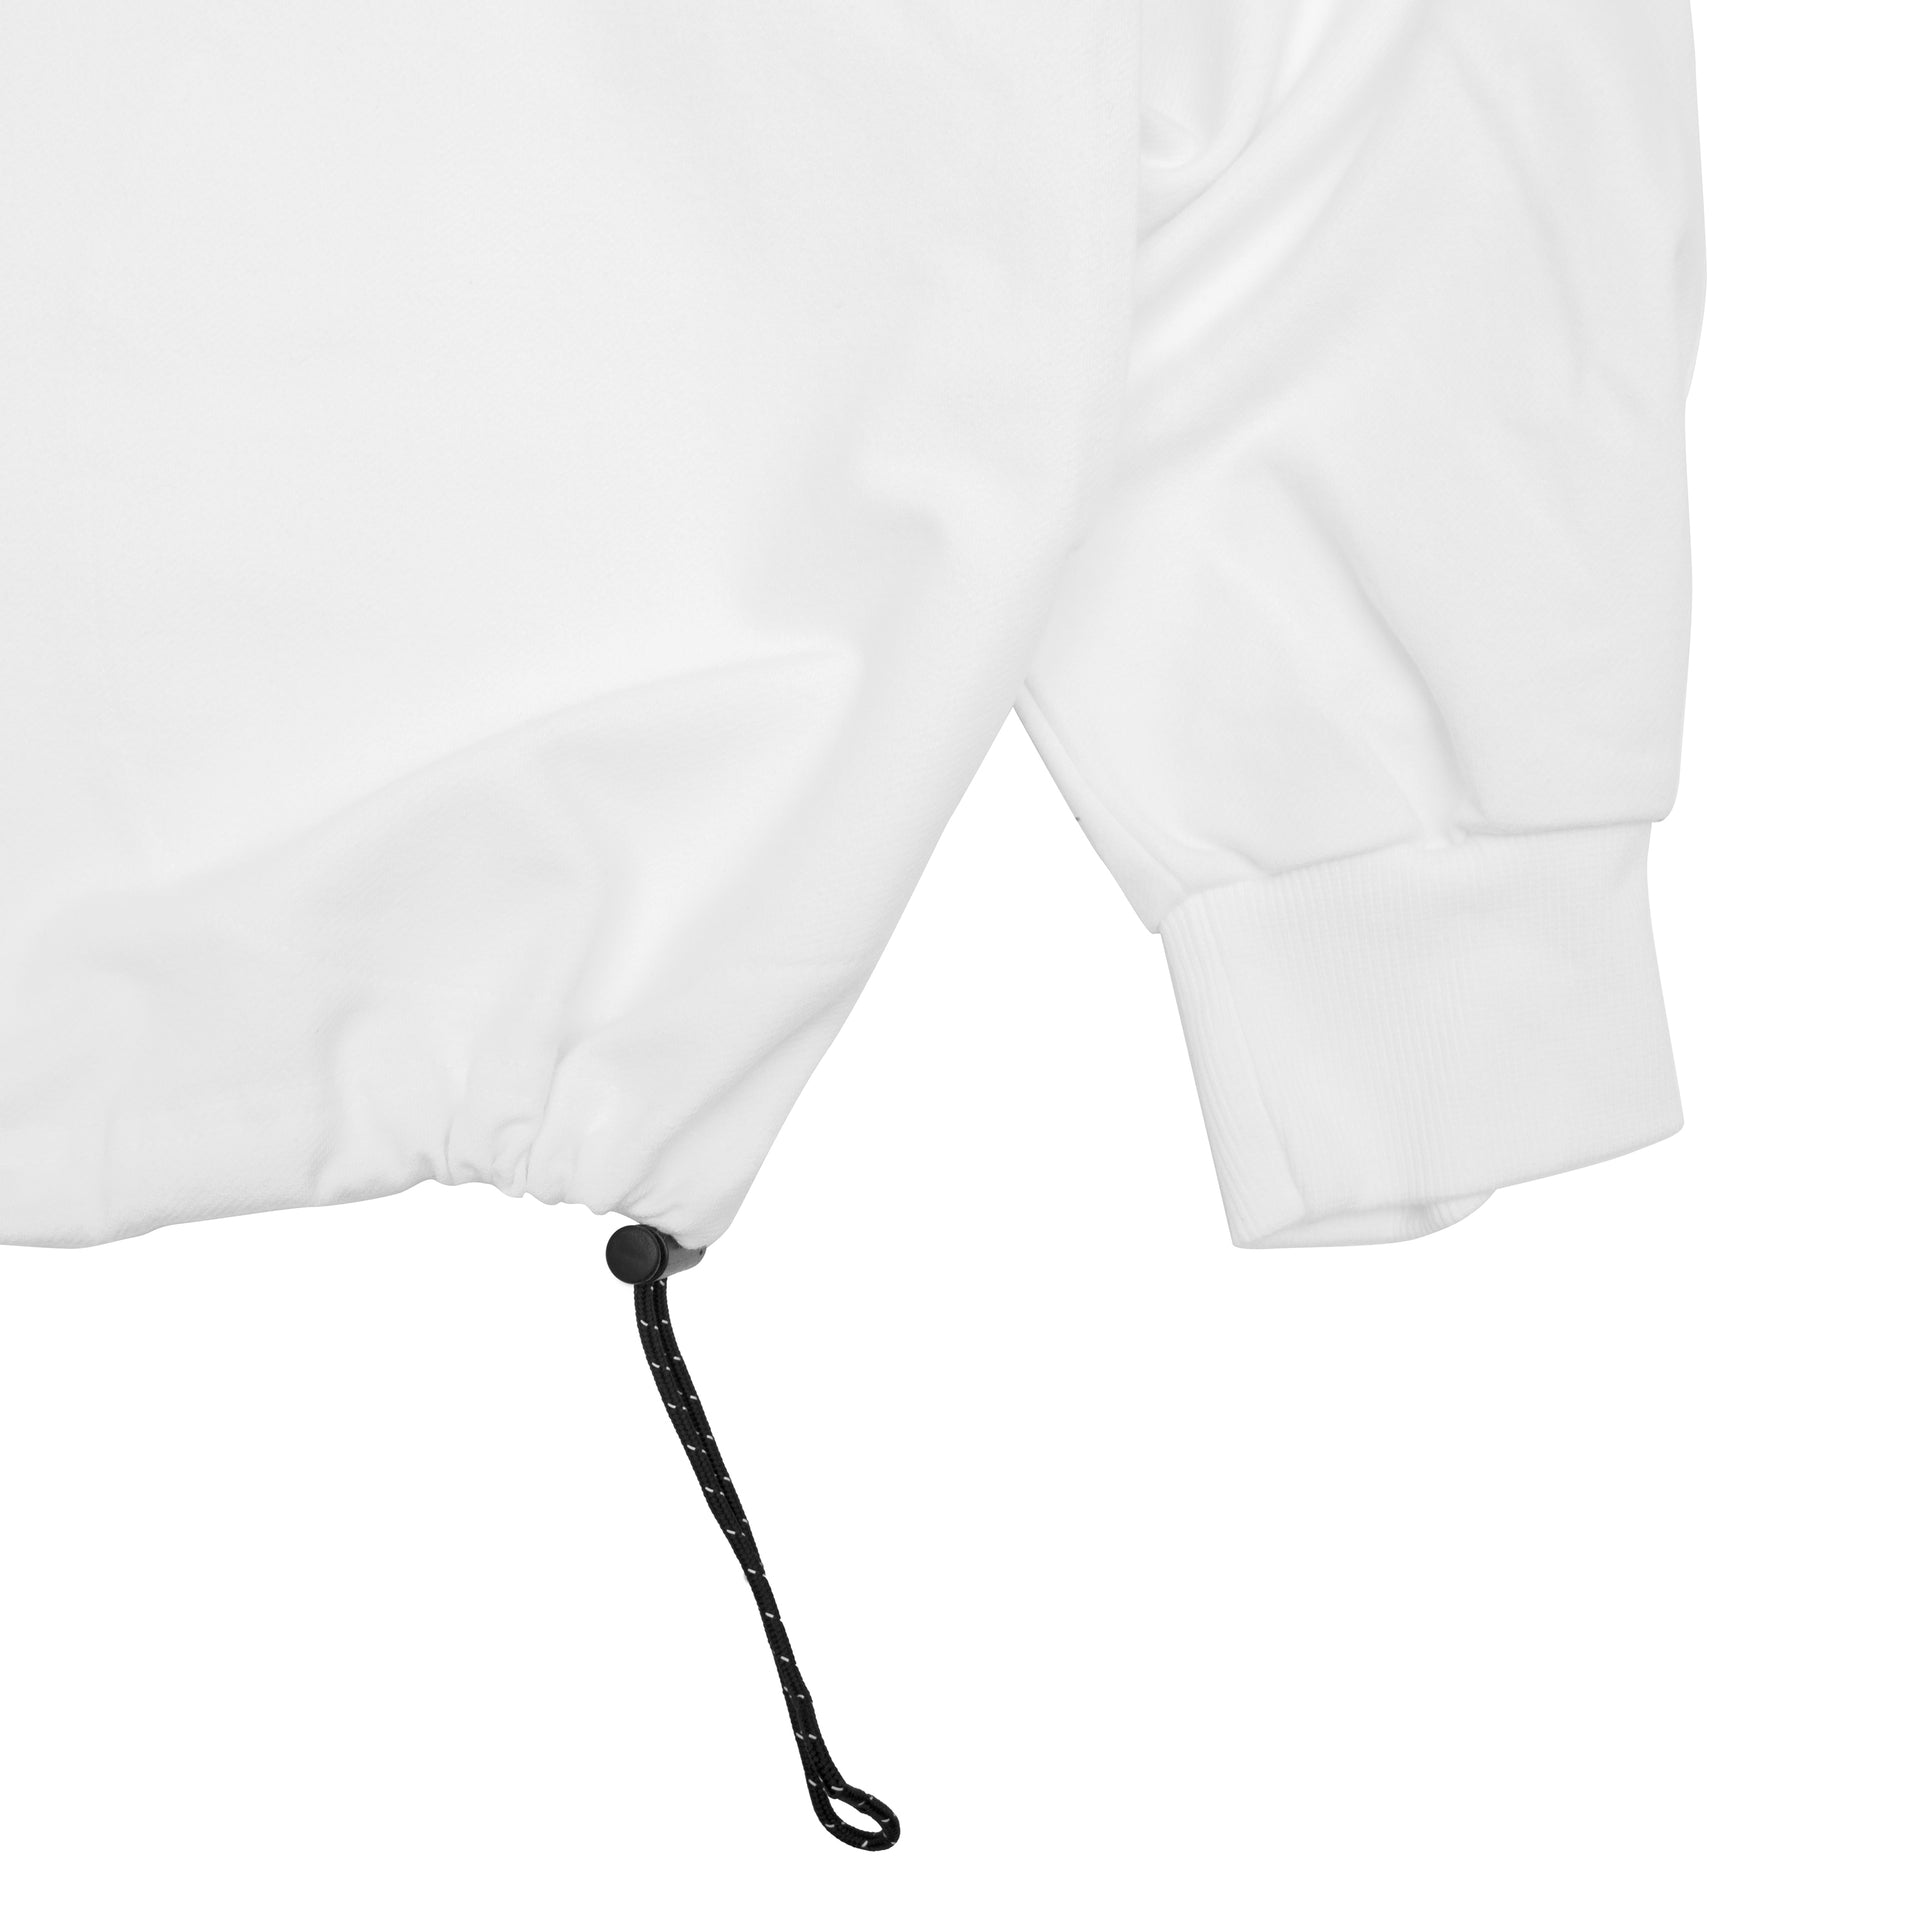 3-pocket sweat in white